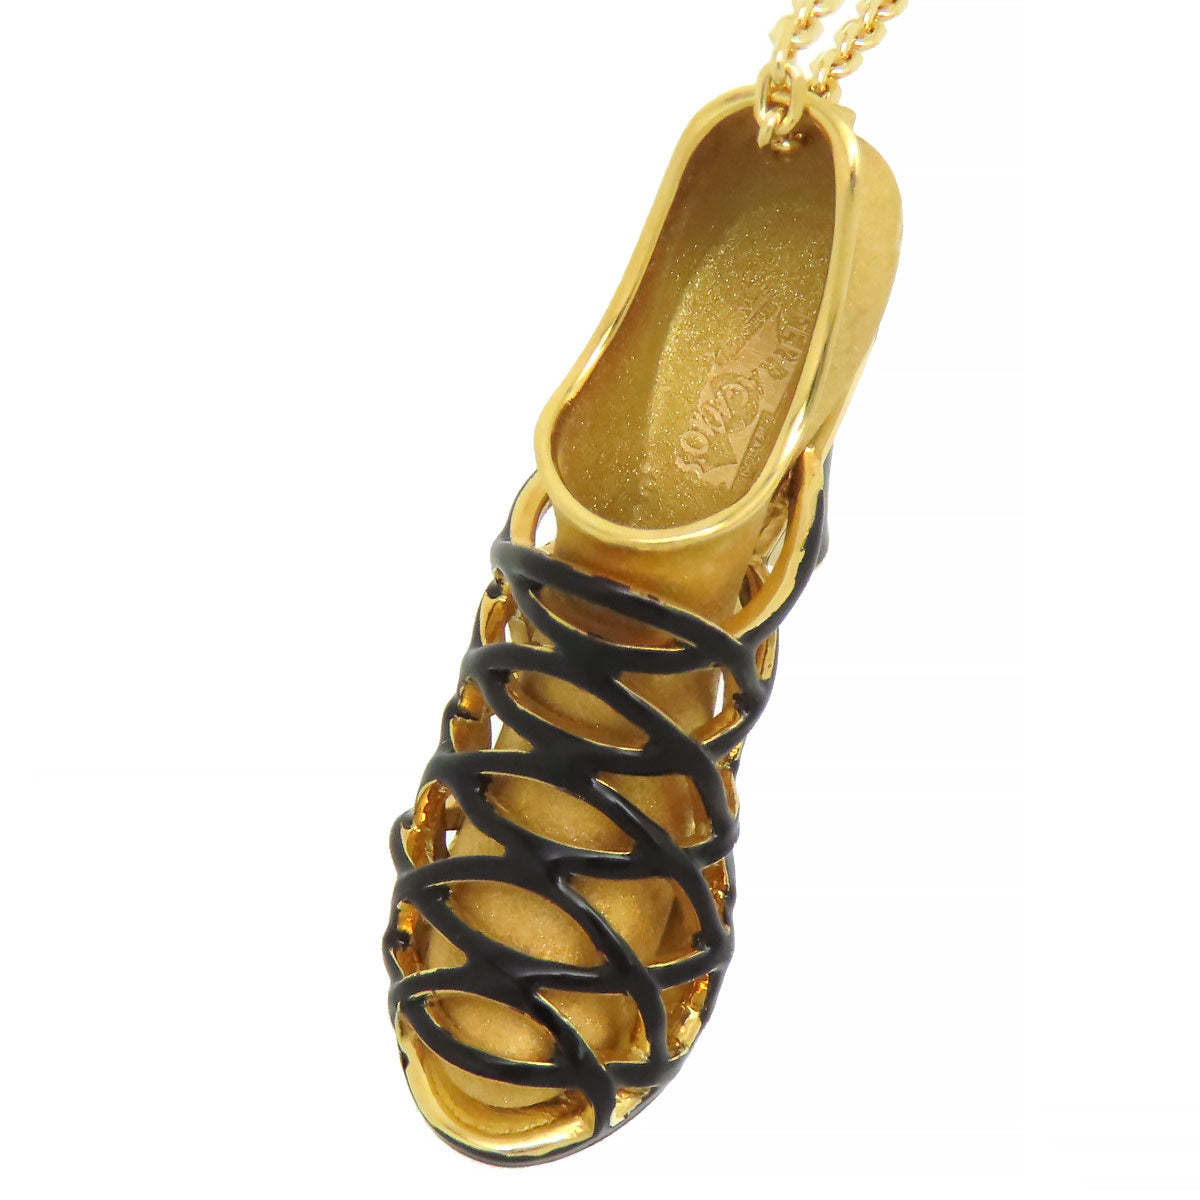 18k Gold Heel Pendant Necklace